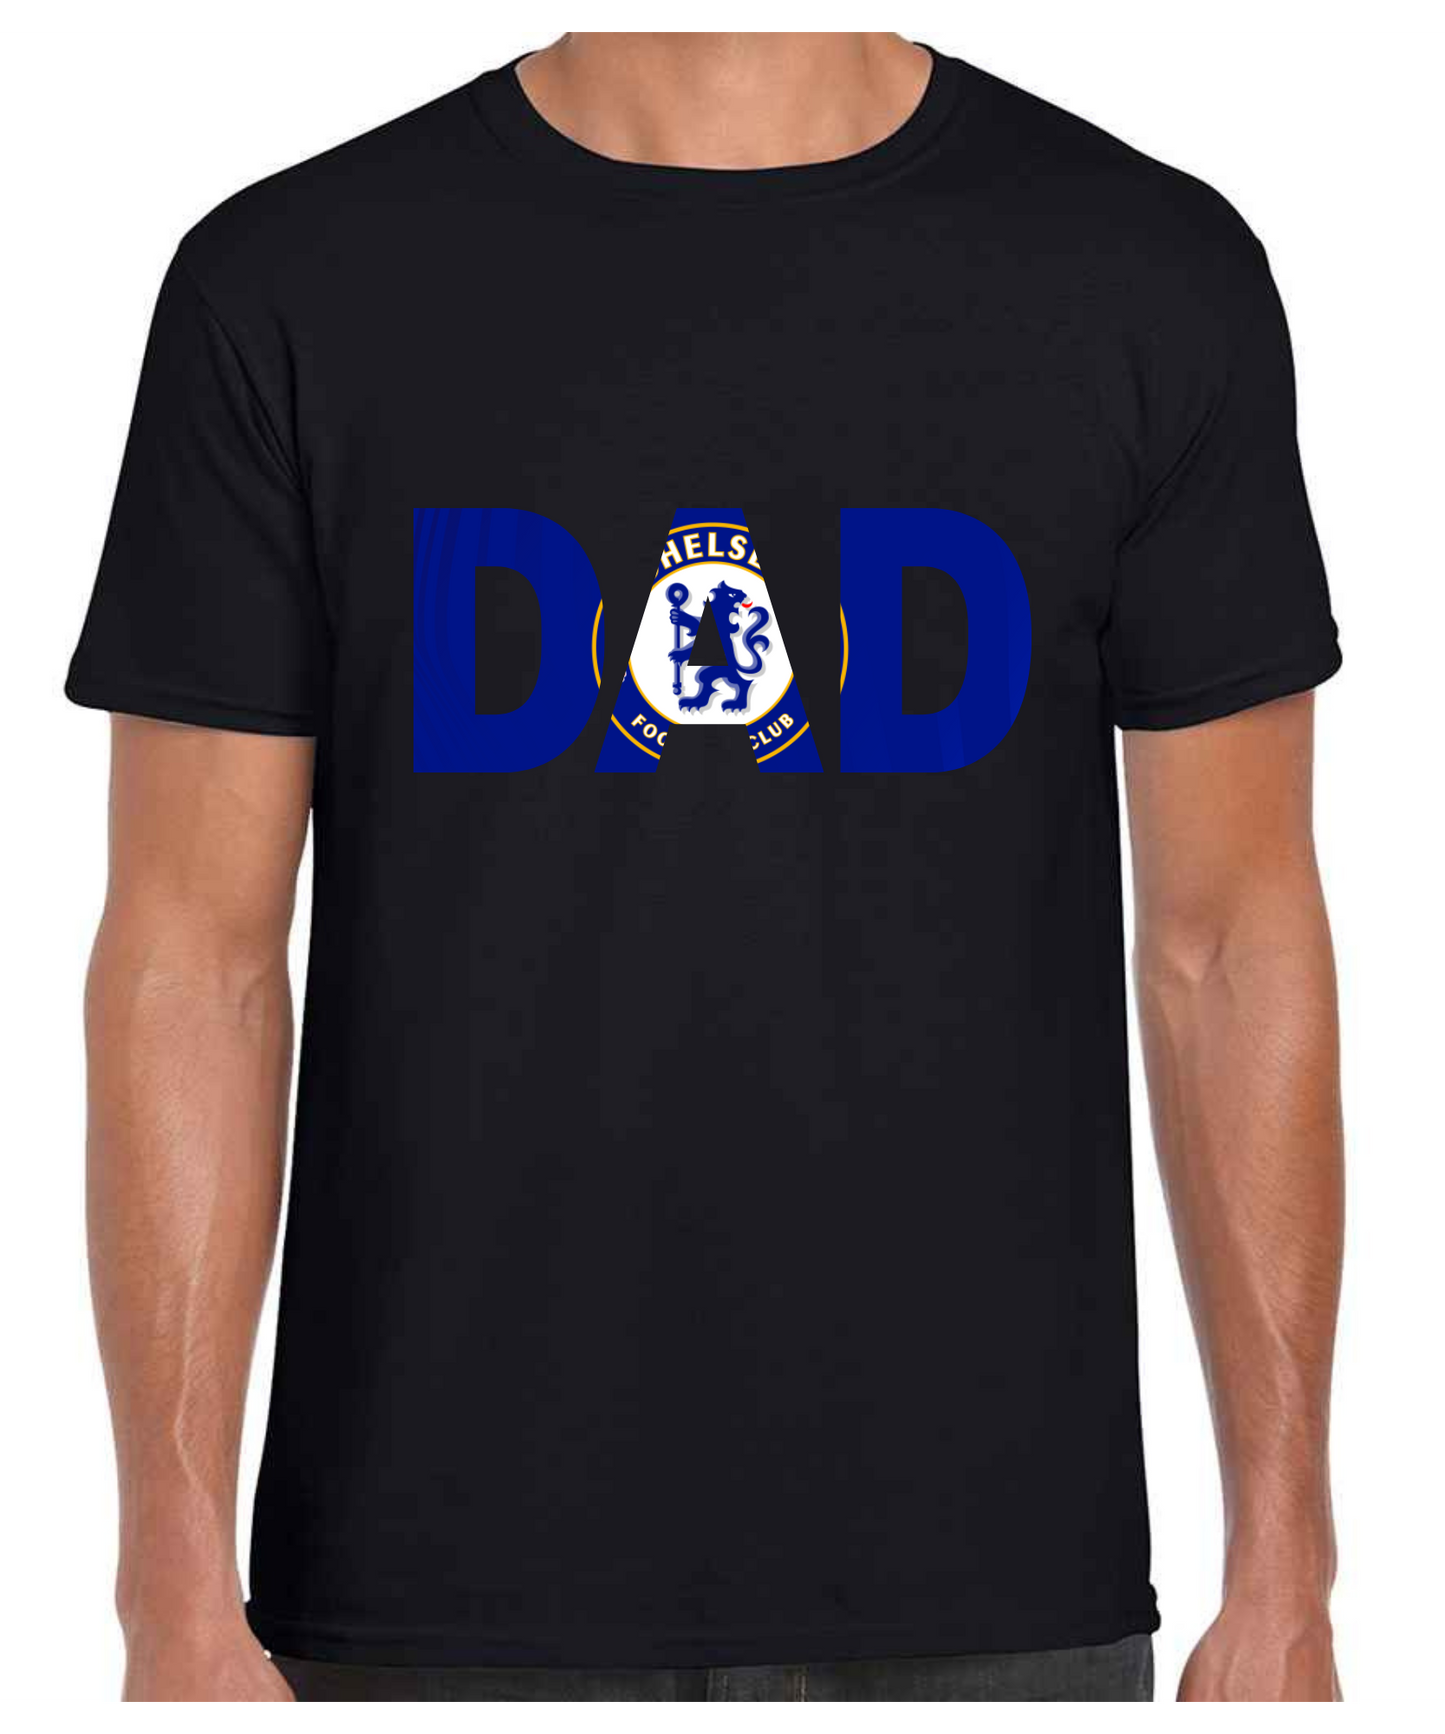 Chelsea - Dad T Shirt (White/Black/Grey)